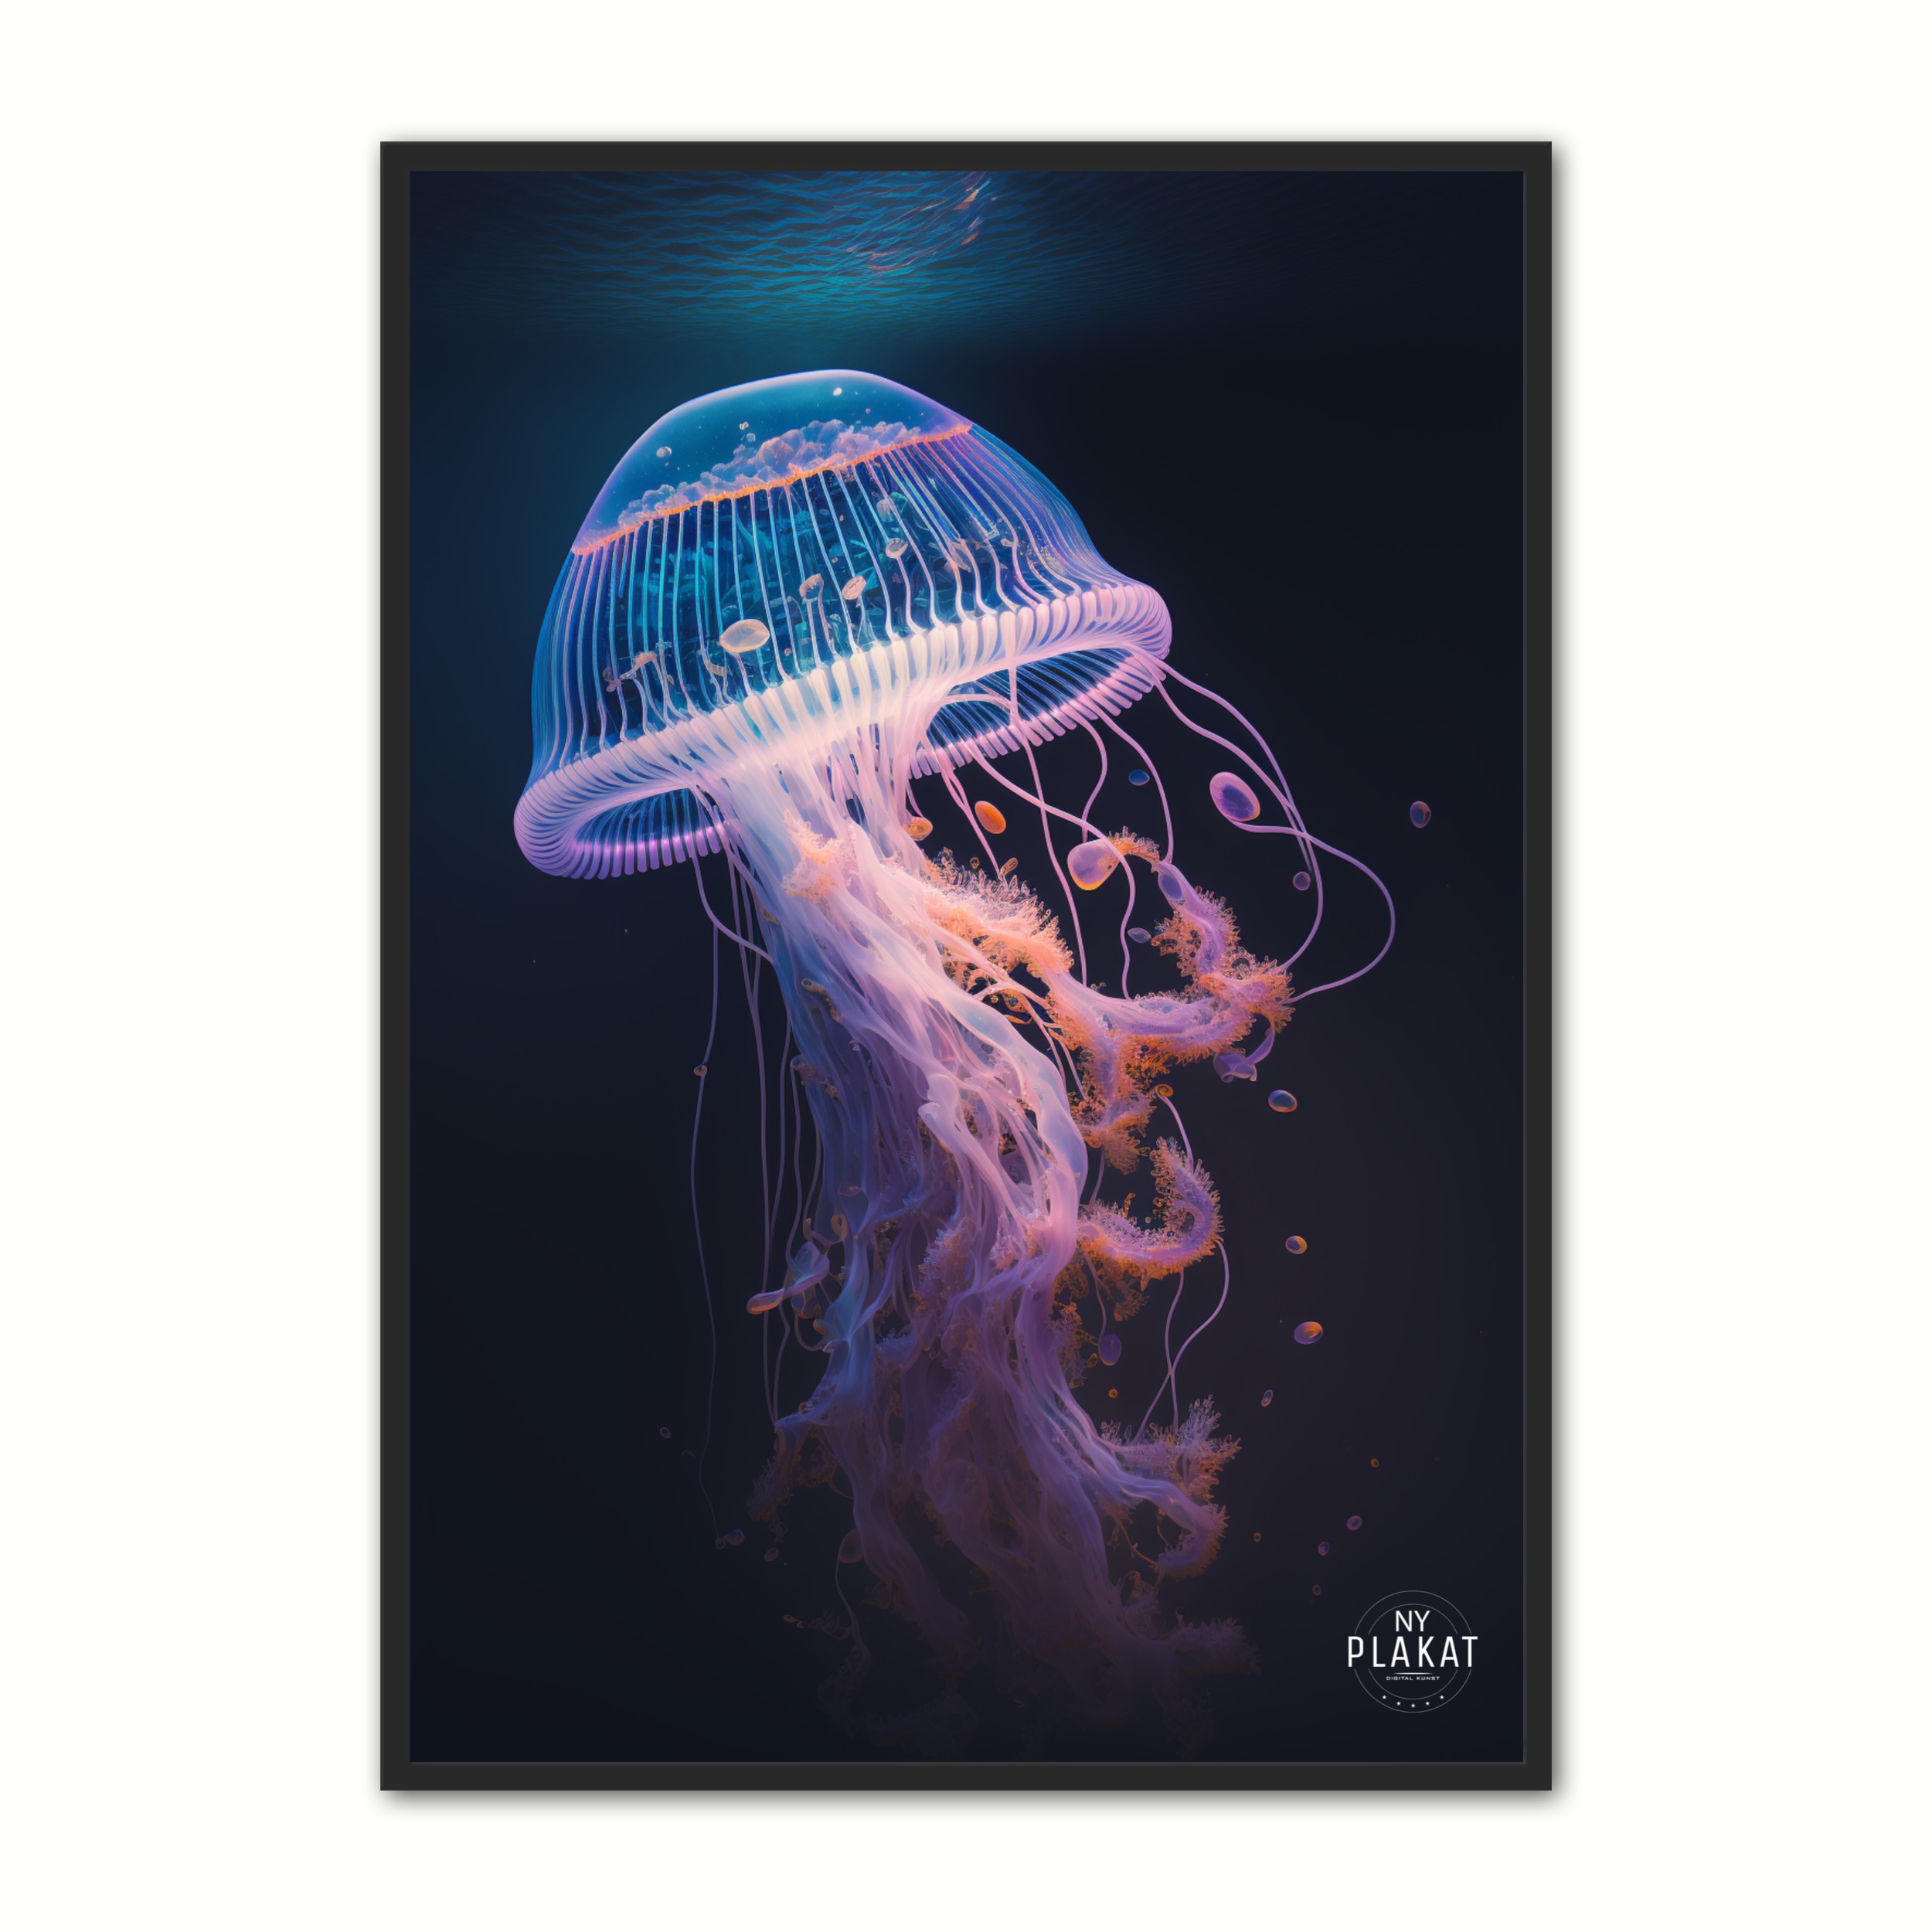 Se Jellyfish plakat No. 5 30 x 40 cm hos Nyplakat.dk